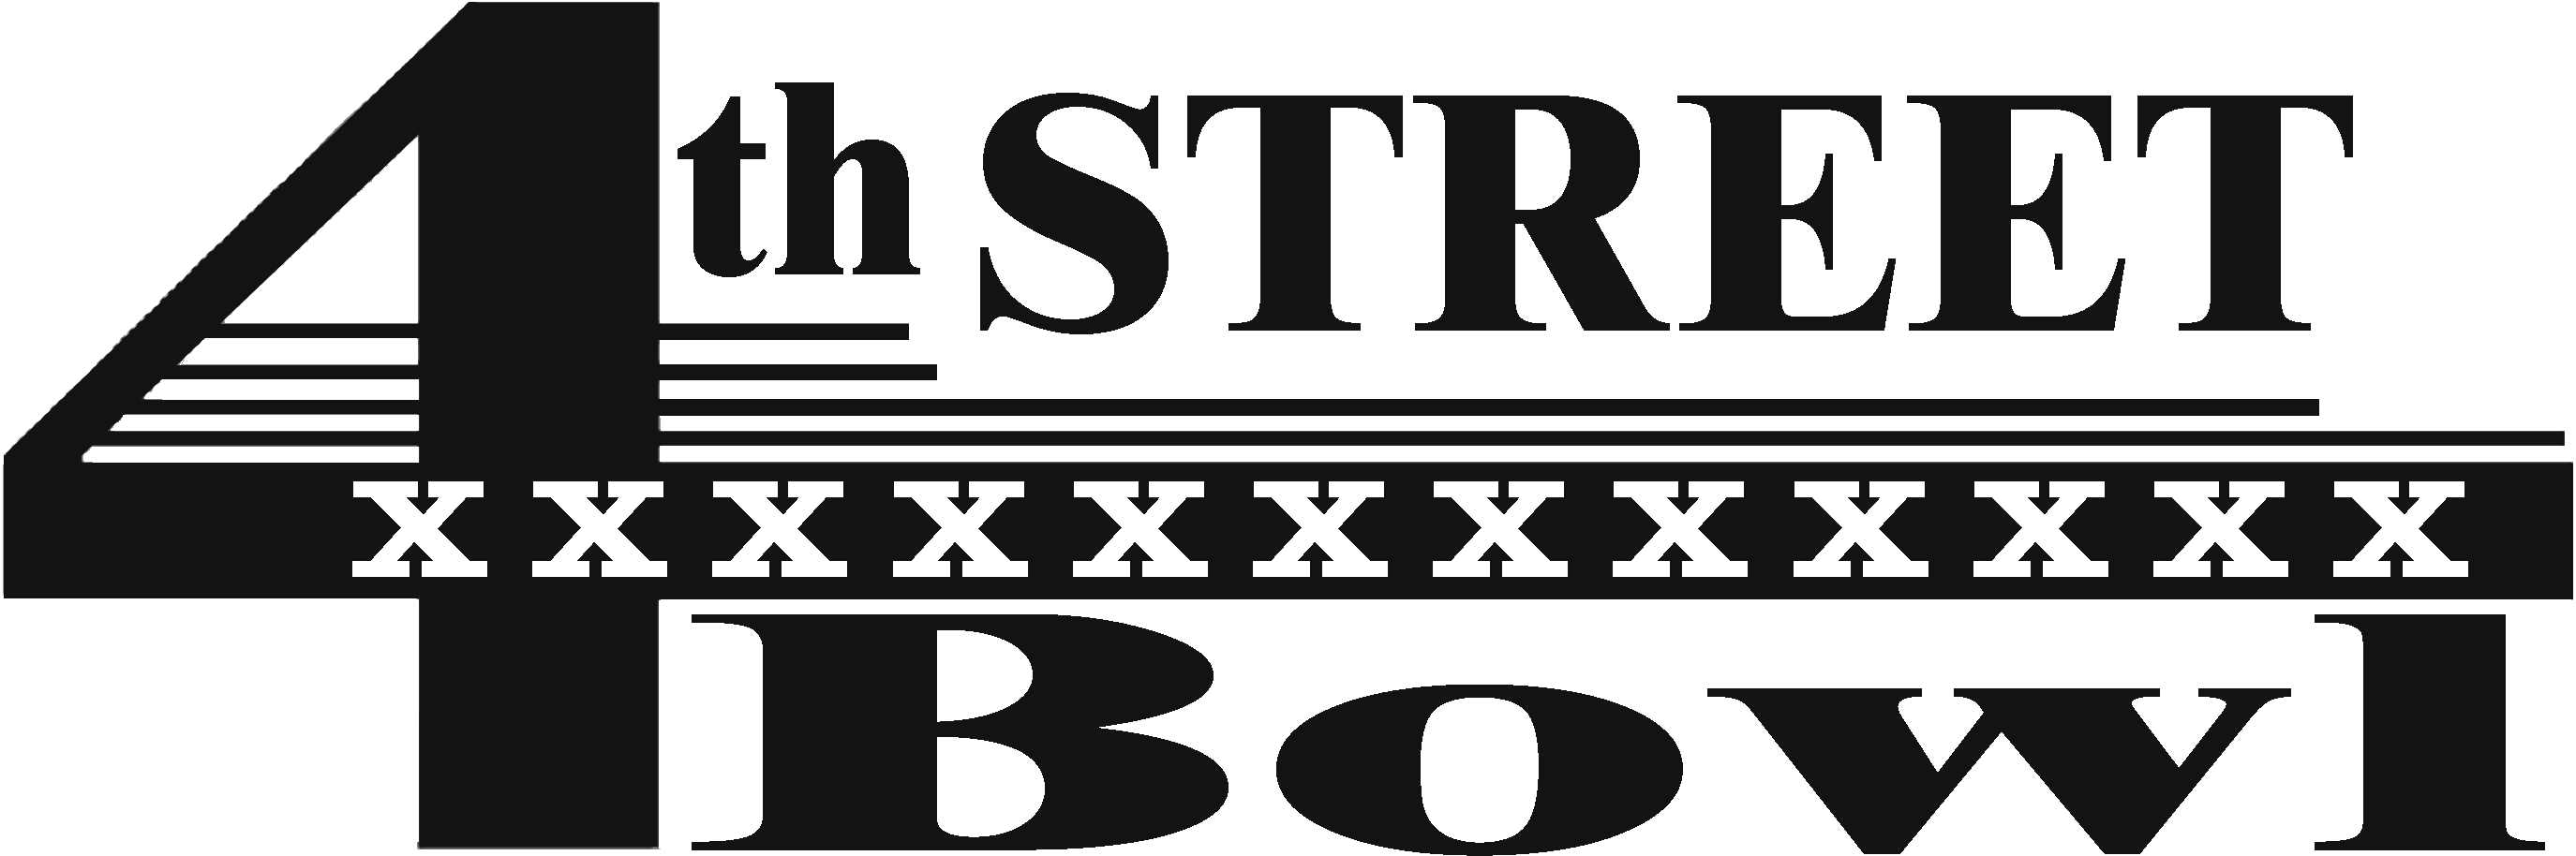 4th Street Bowl Logo